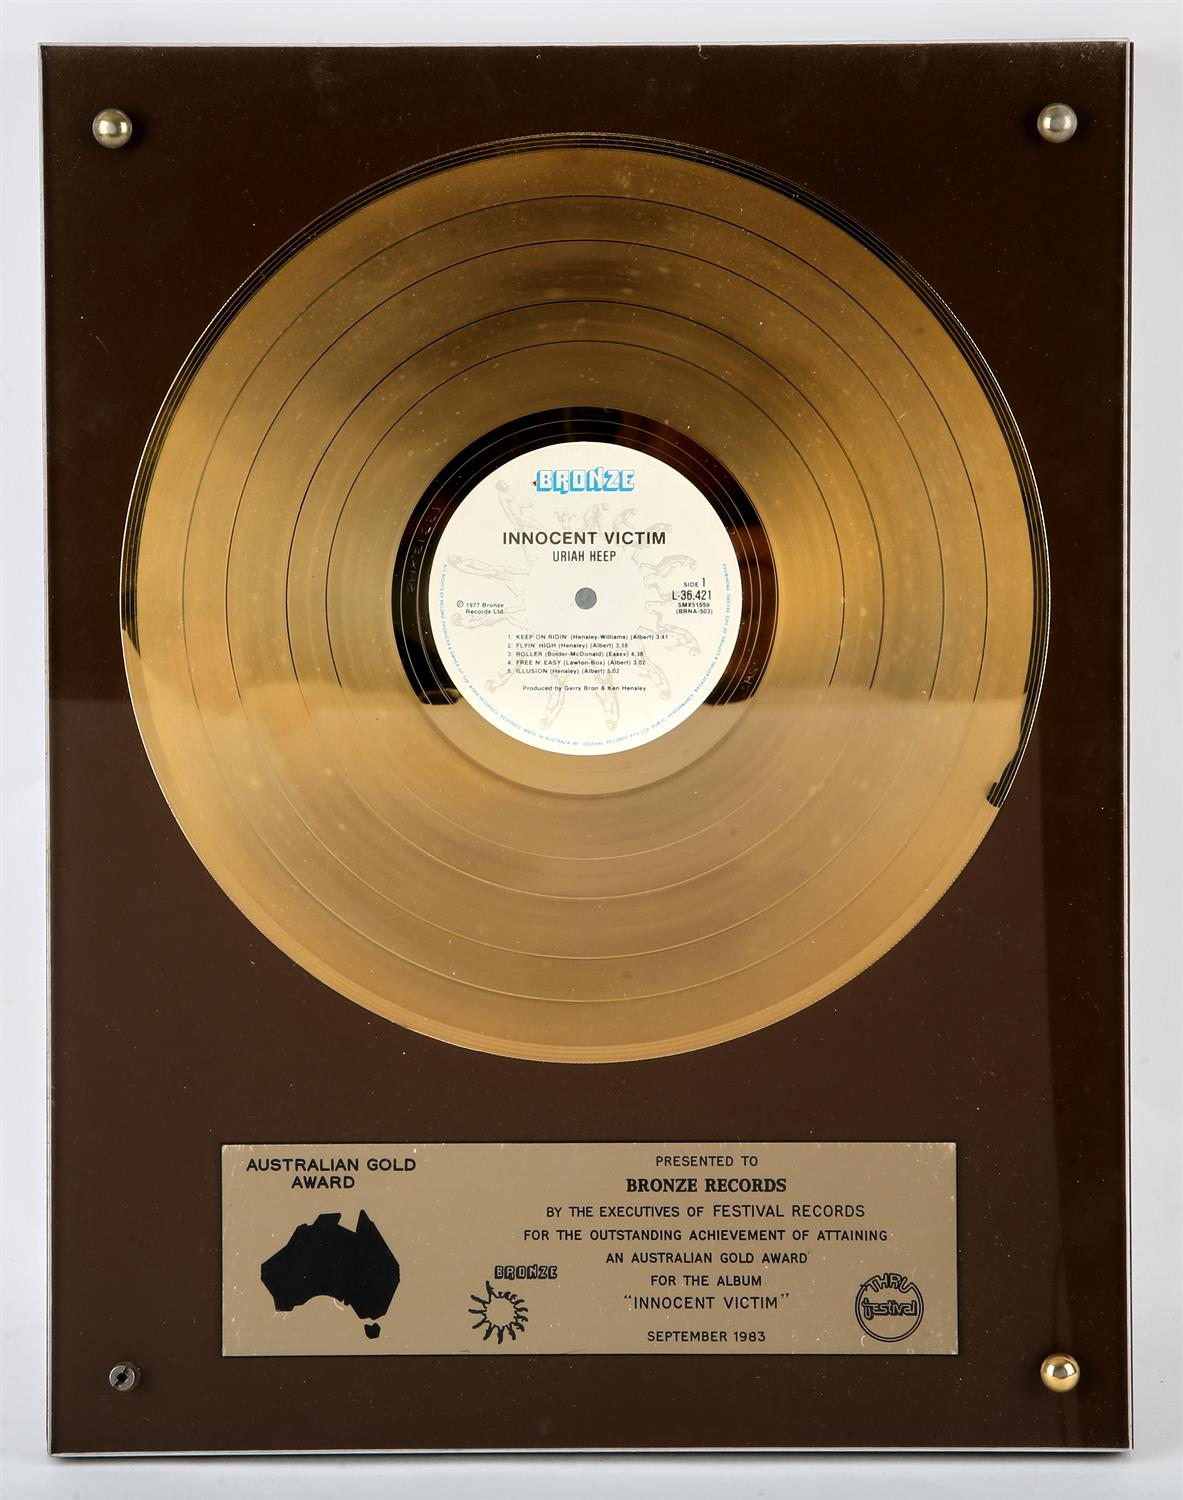 Uriah Heap. – Gold Disc for the album, ‘Innocent Victim’, Australian Gold Award, presented to